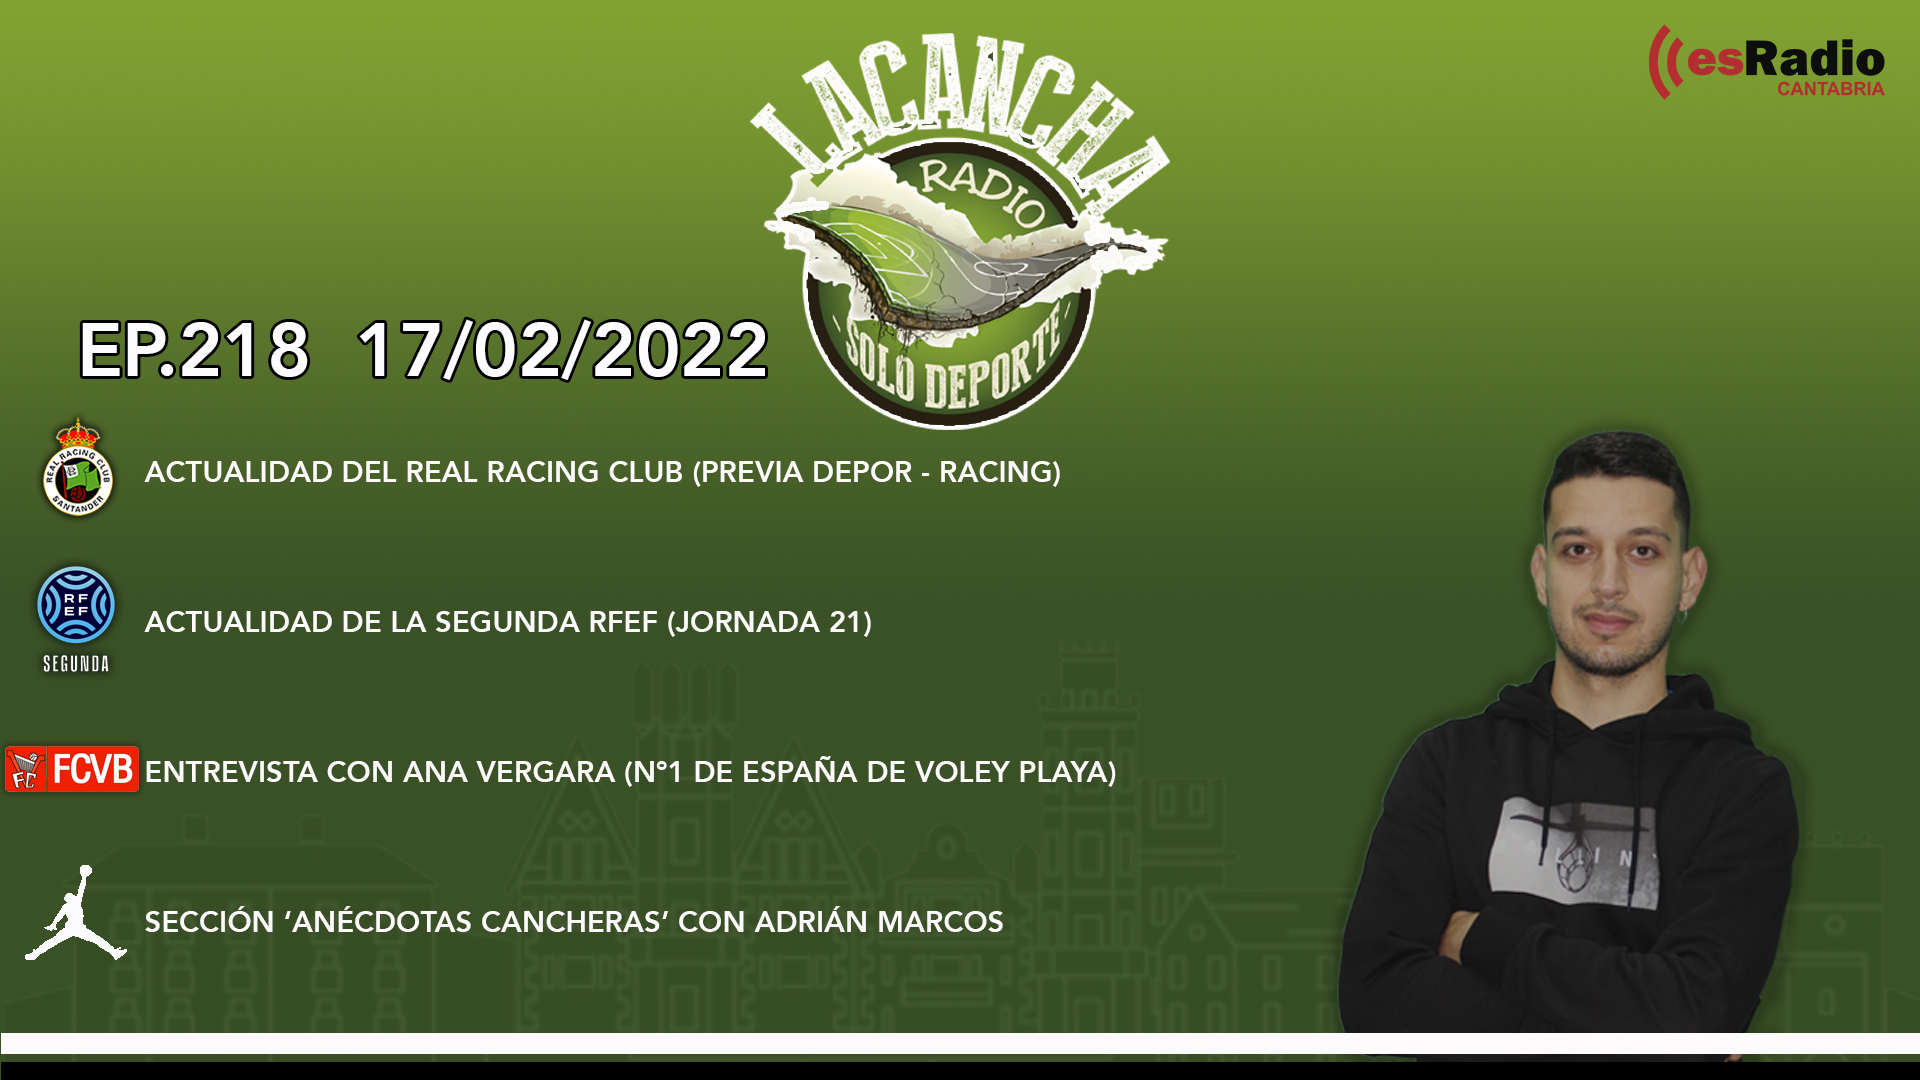 La Cancha Ep. 218 (17/02/2022)